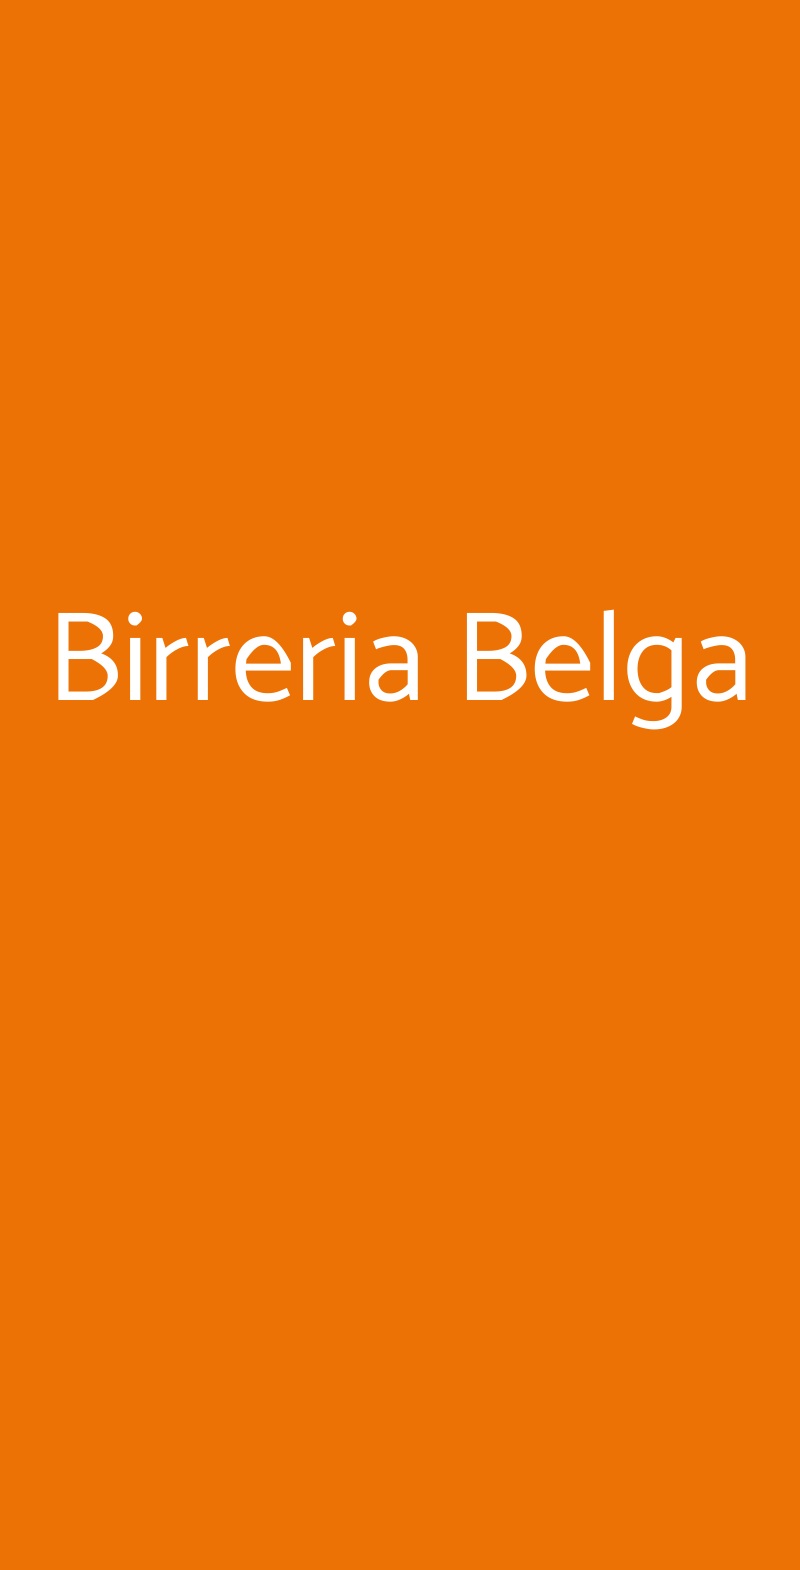 Birreria Belga Napoli menù 1 pagina